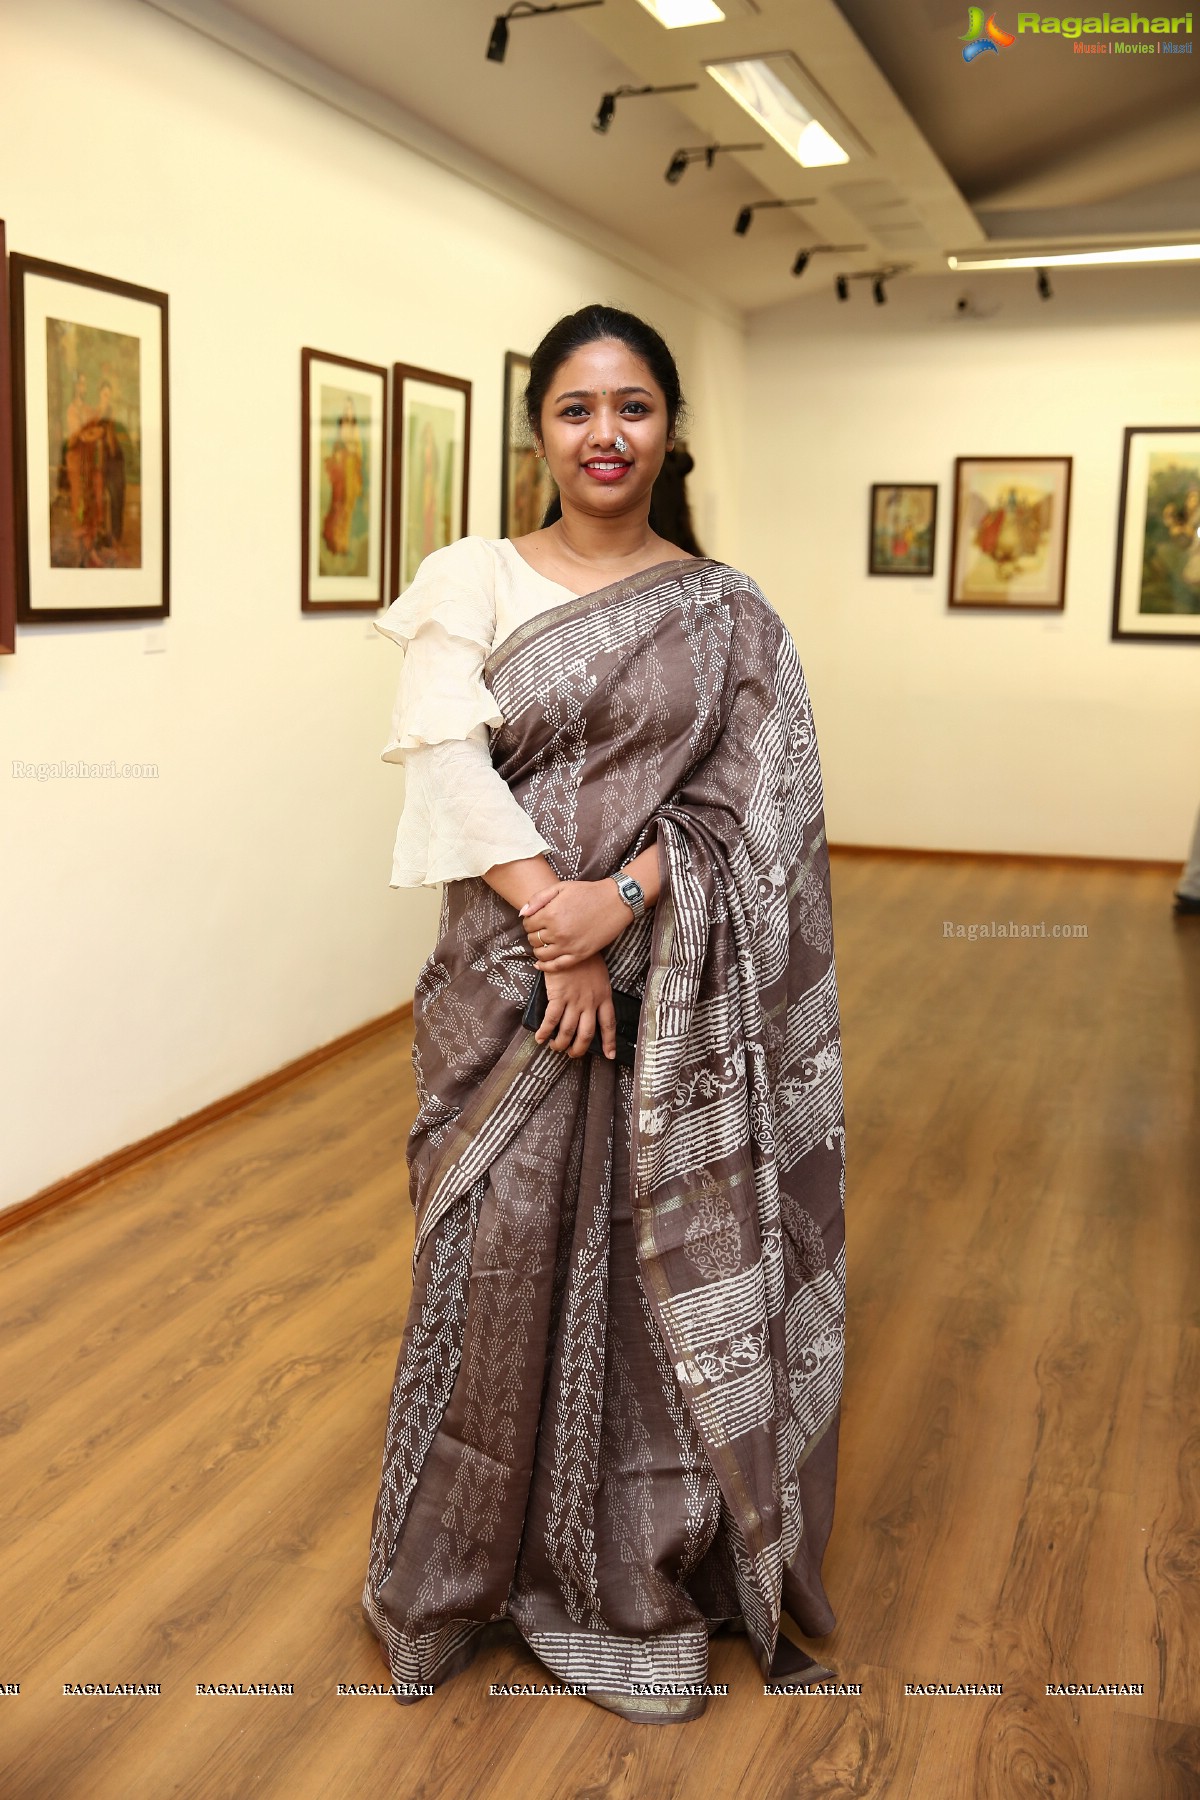 Kalakriti Art Gallery 'Windows to the Gods' Exhibition